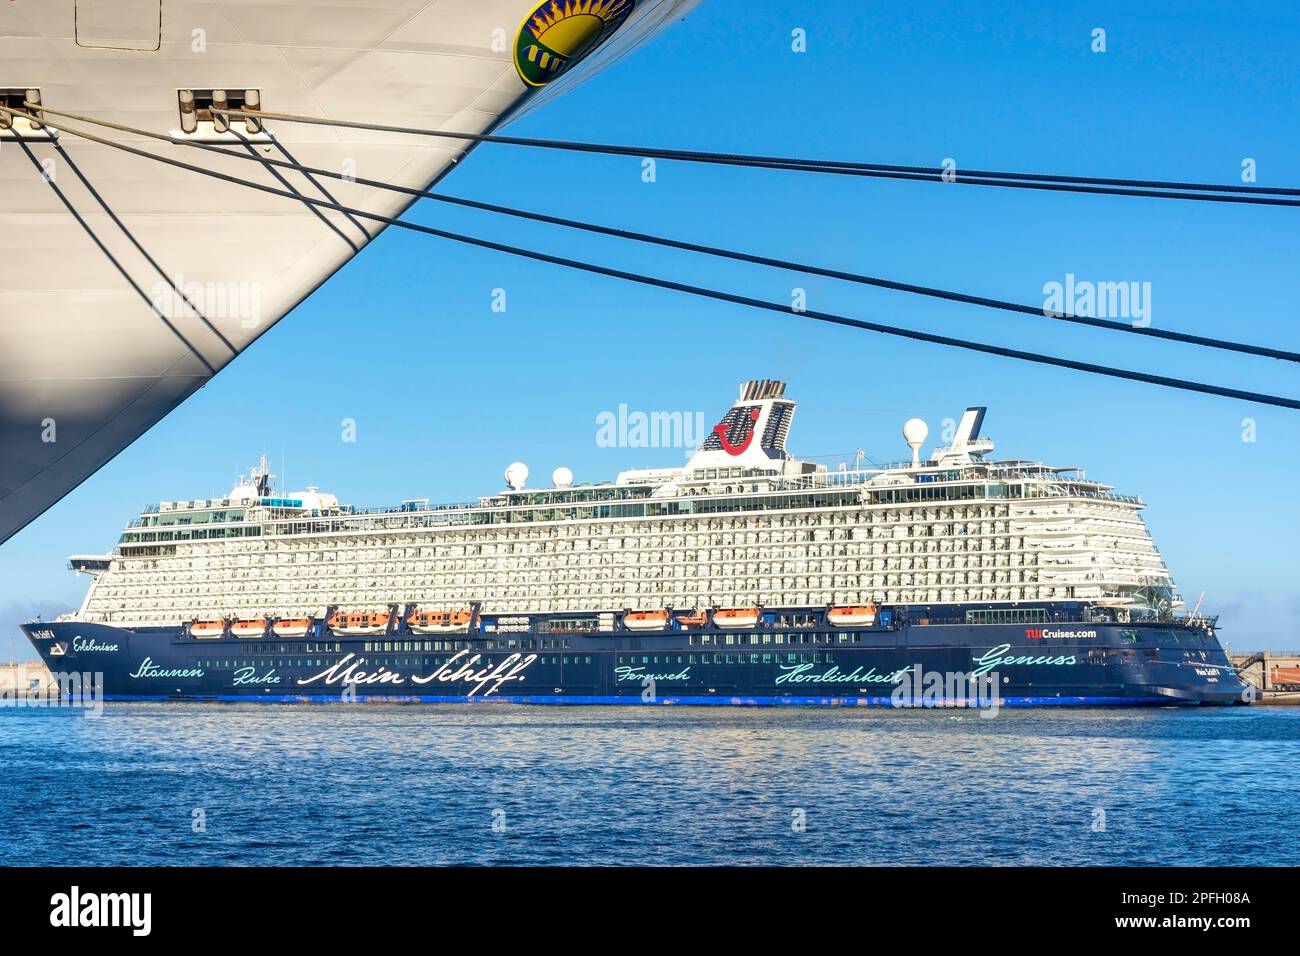 Tui Mein Schiff 4 cruise ship berthed in Santa Cruz de Tenerife, Tenerife, Canary Islands, Kingdom of Spain Stock Photo